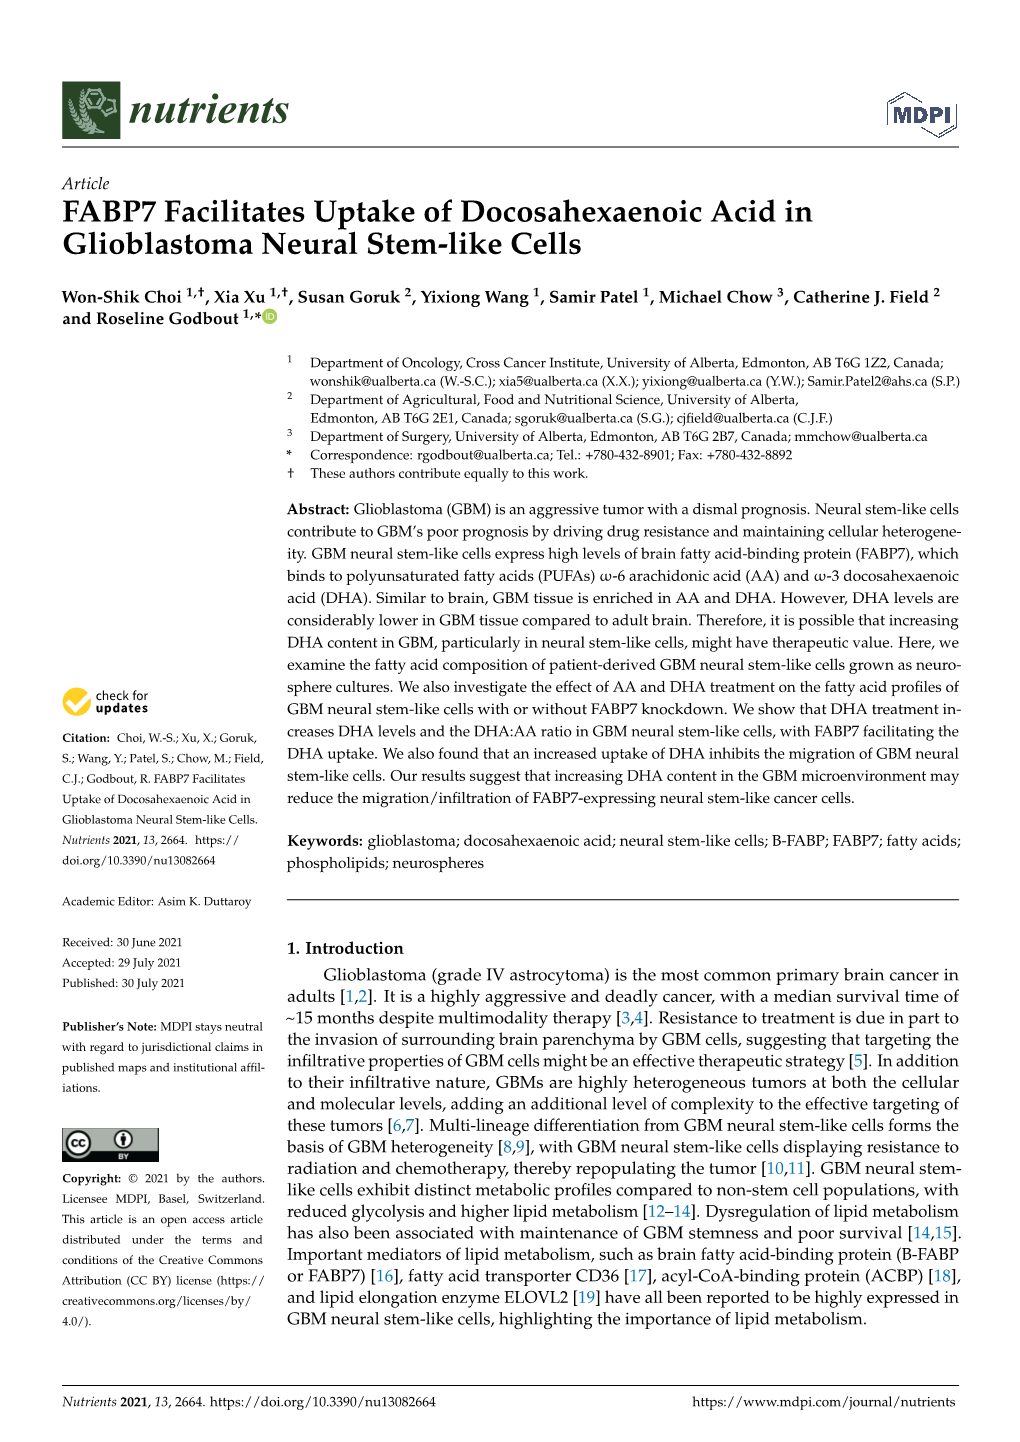 FABP7 Facilitates Uptake of Docosahexaenoic Acid in Glioblastoma Neural Stem-Like Cells